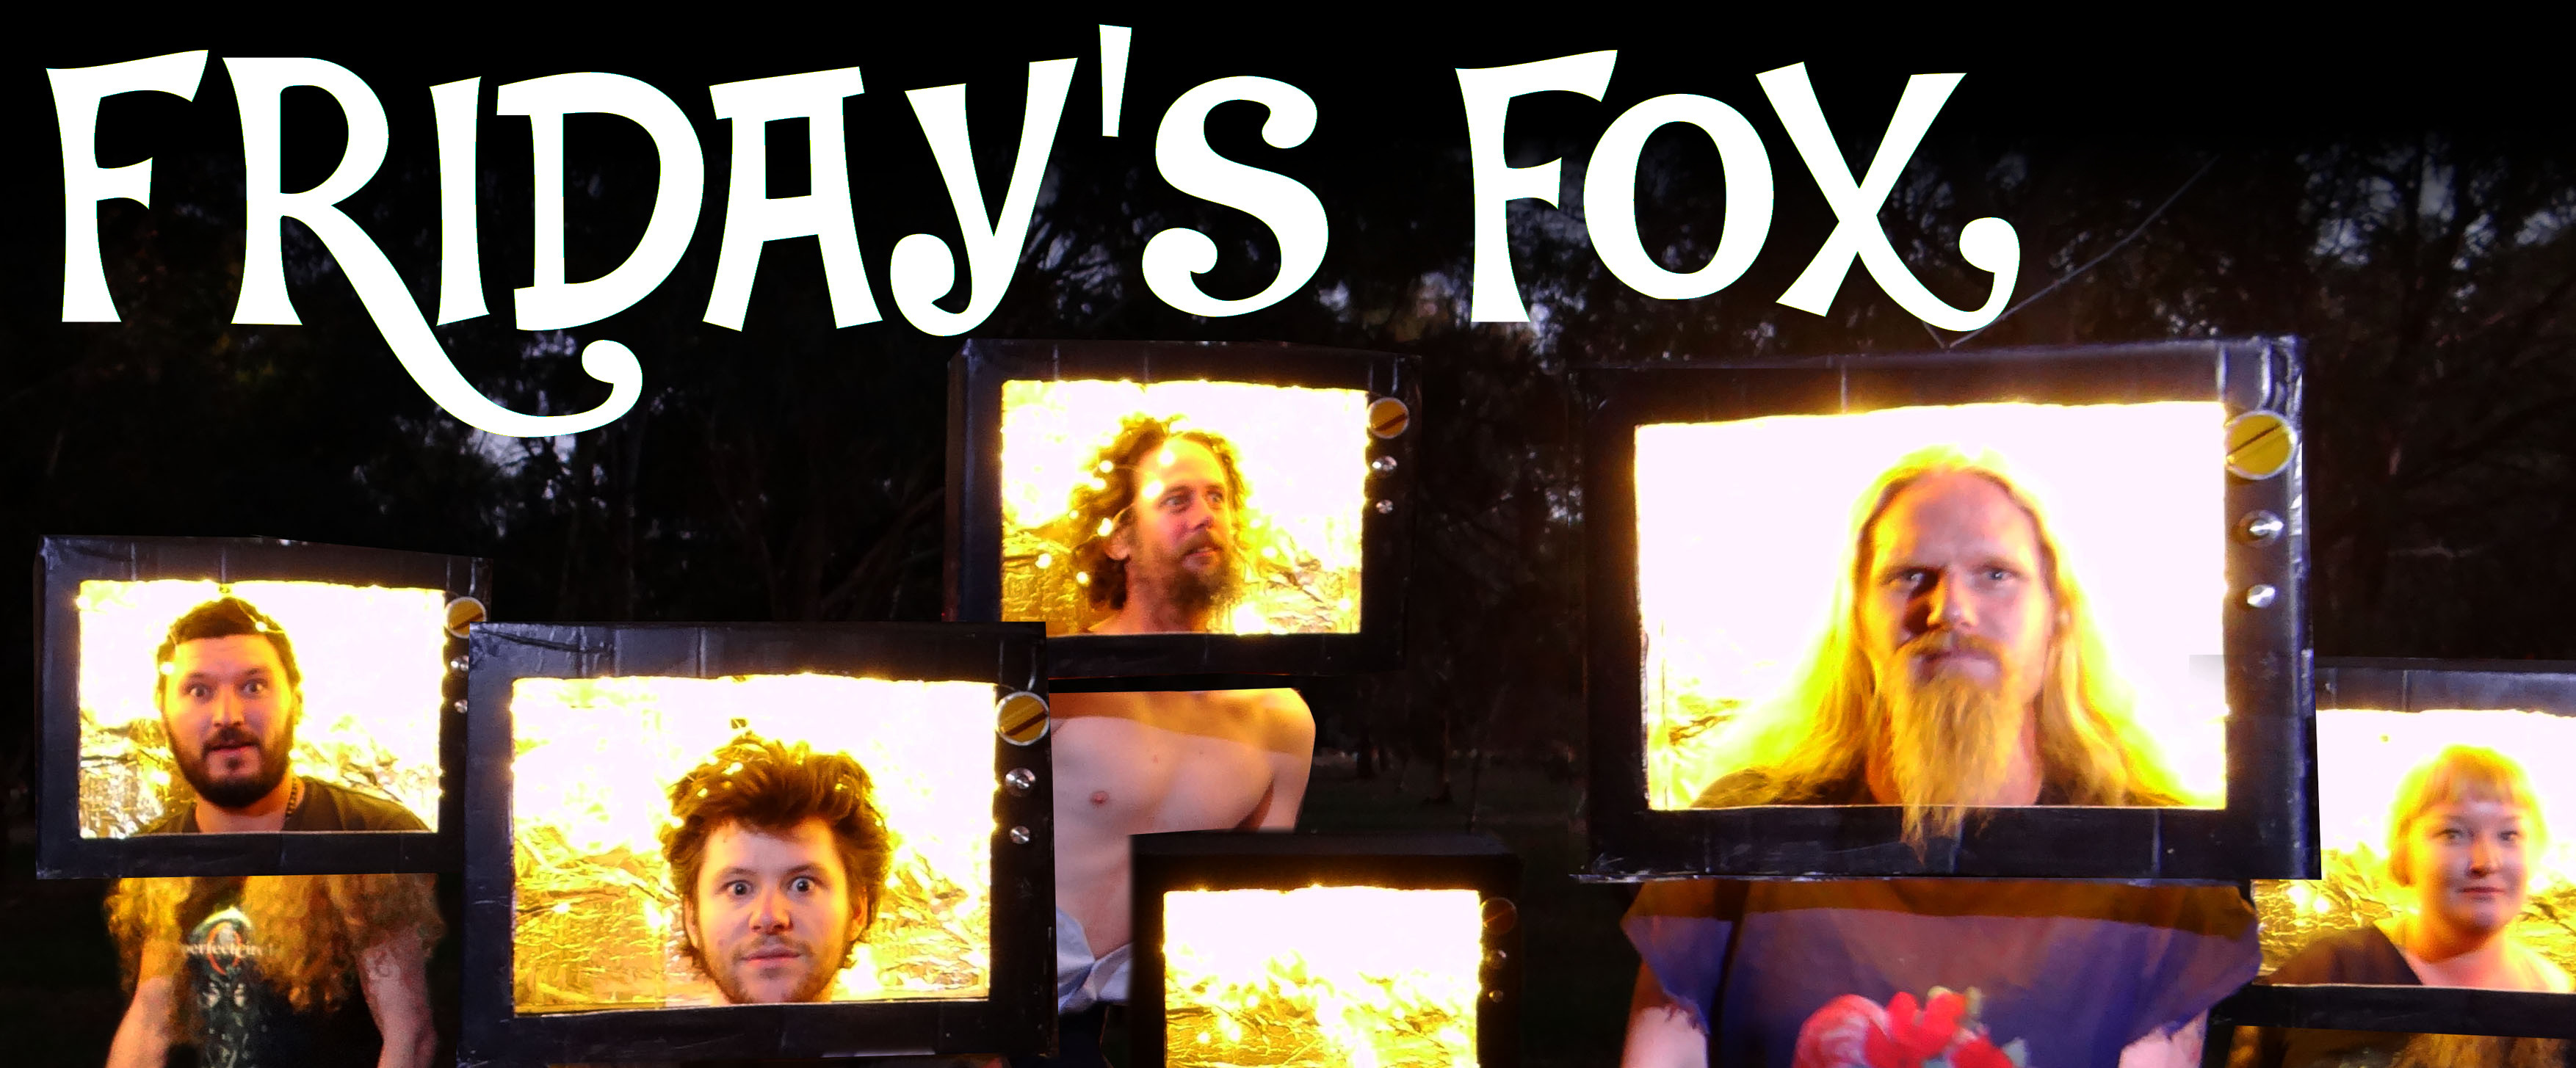 Friday's Fox